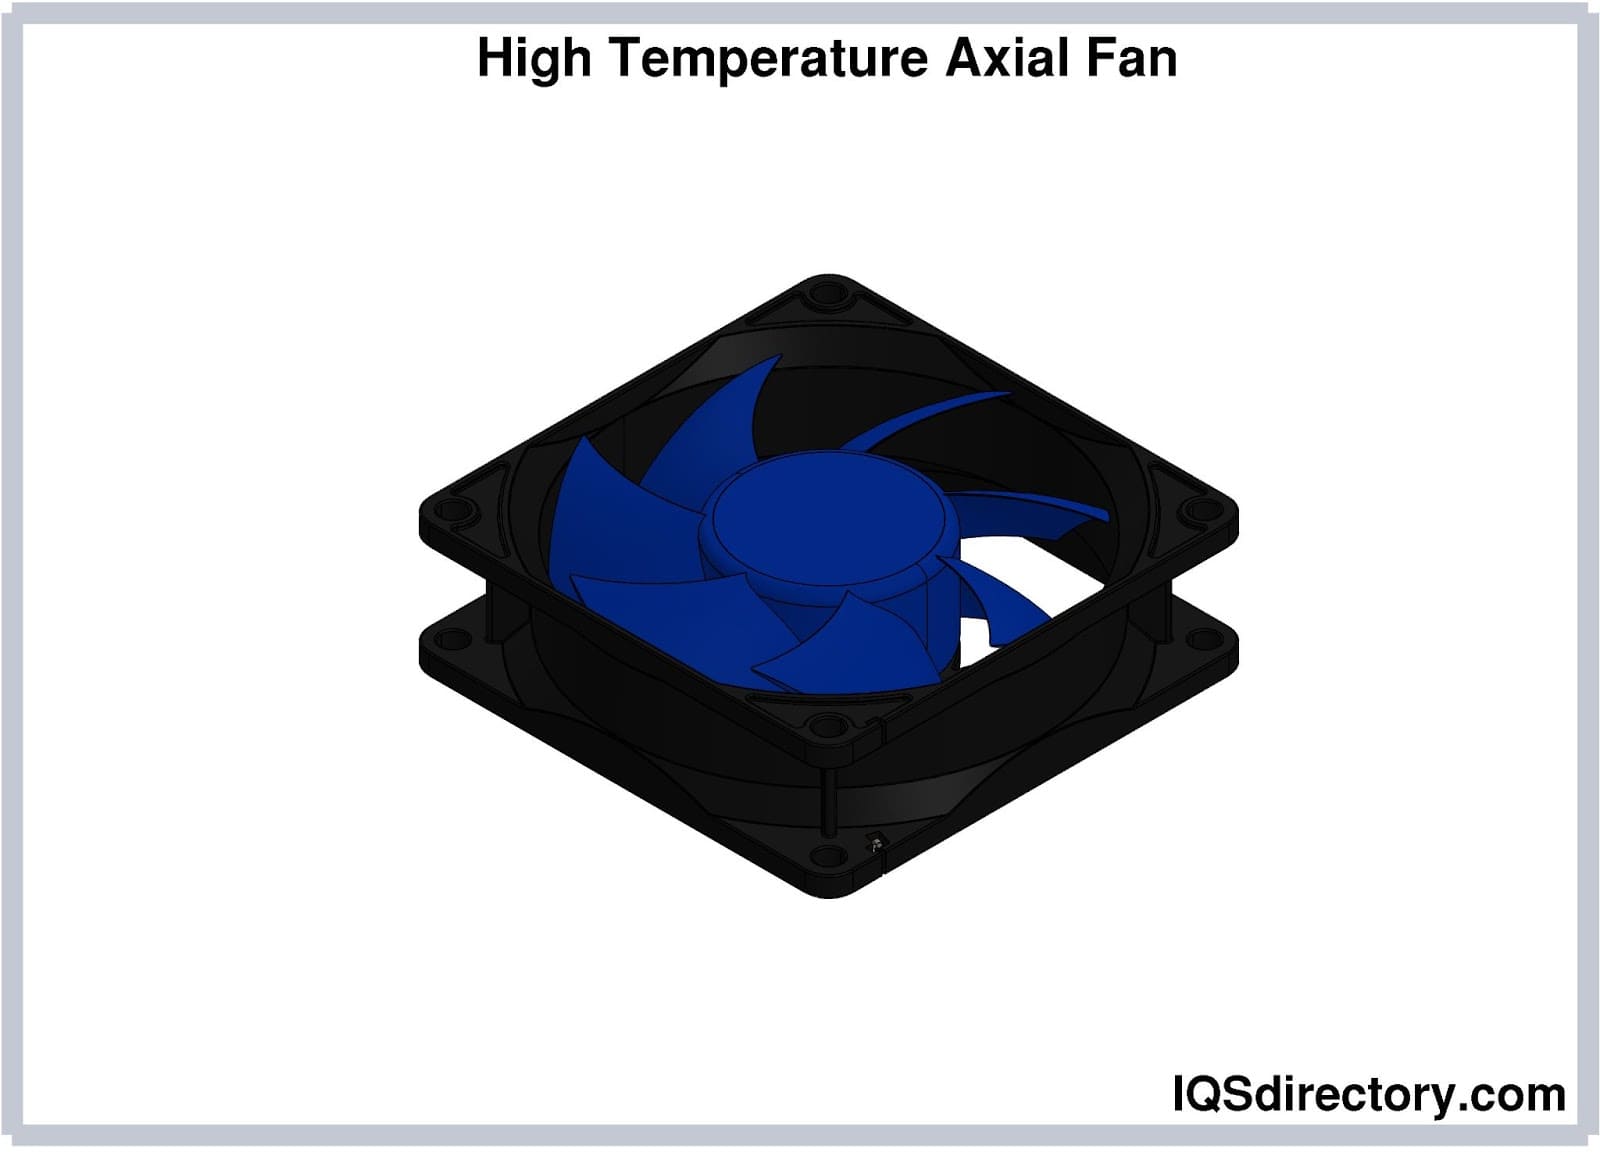 High Temperature Axial Fan